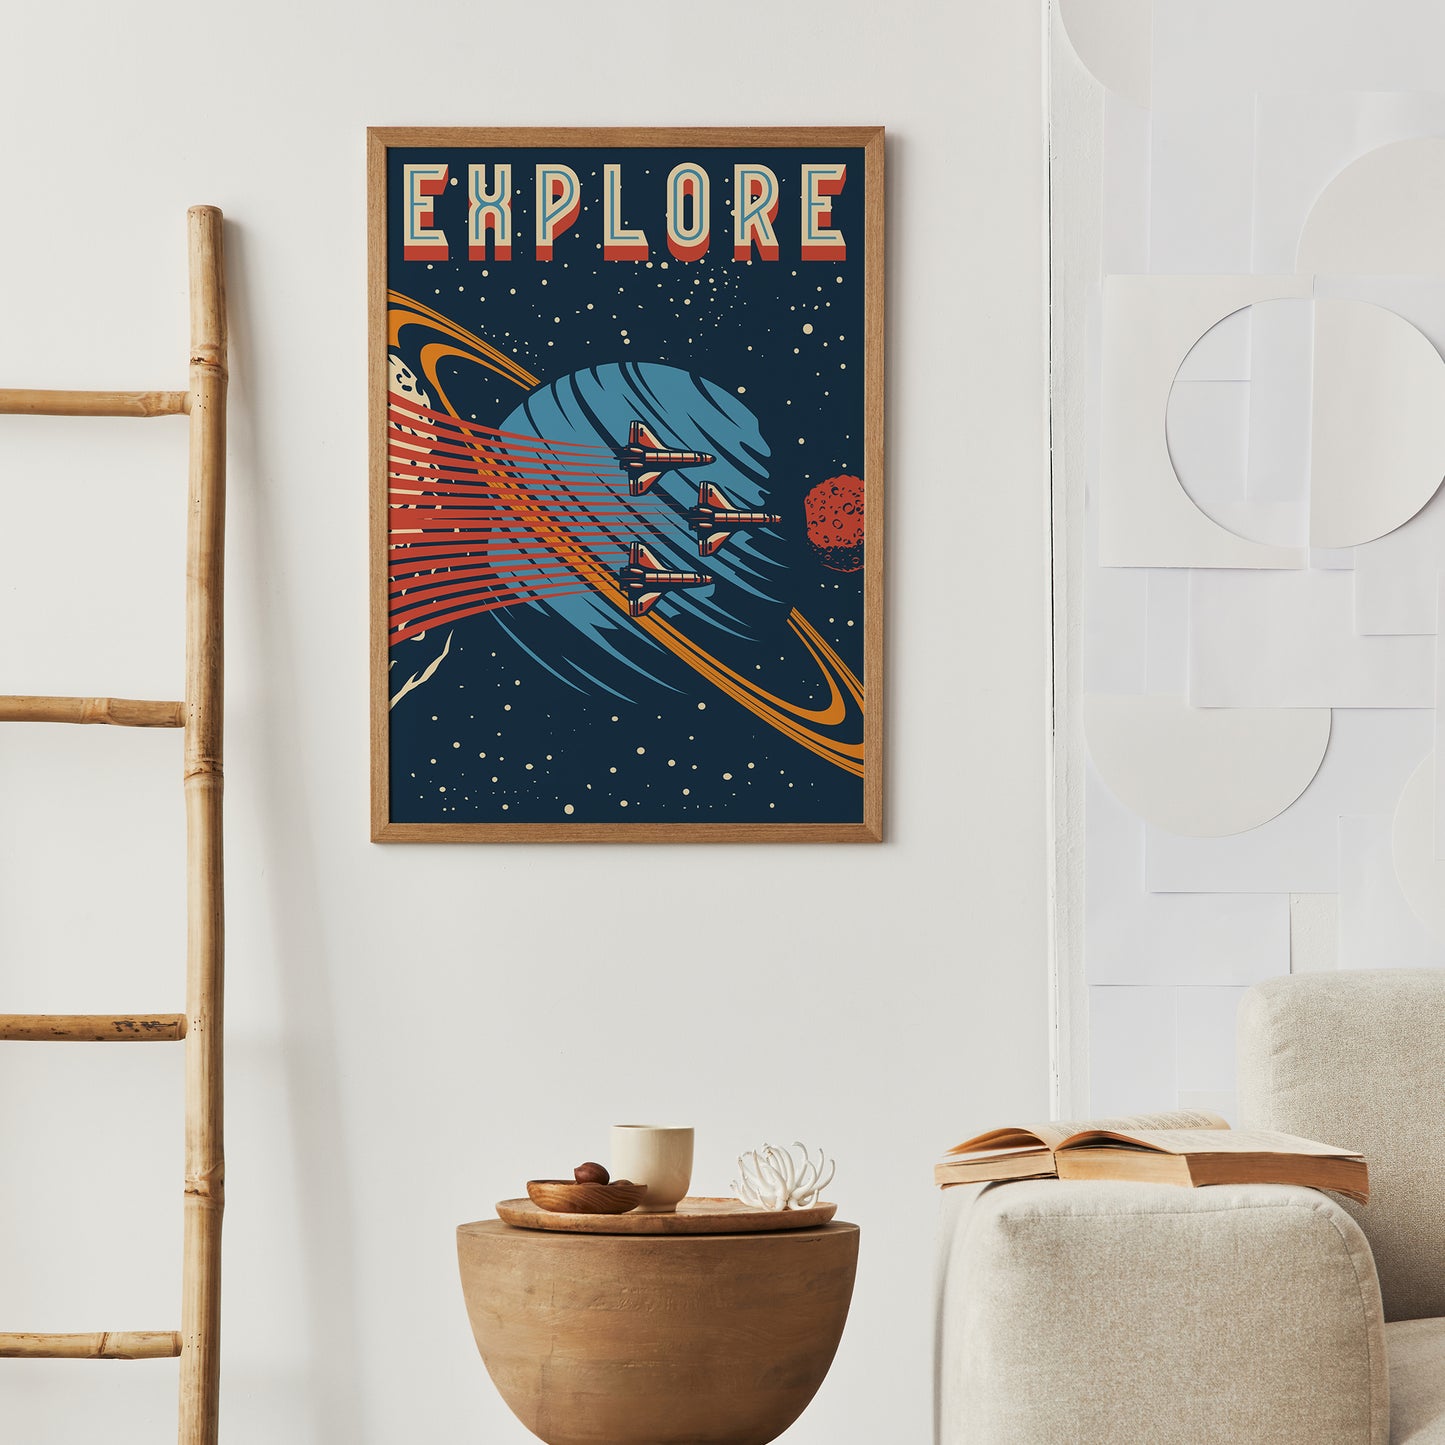 EXPLORE - Retro Space Travel Poster